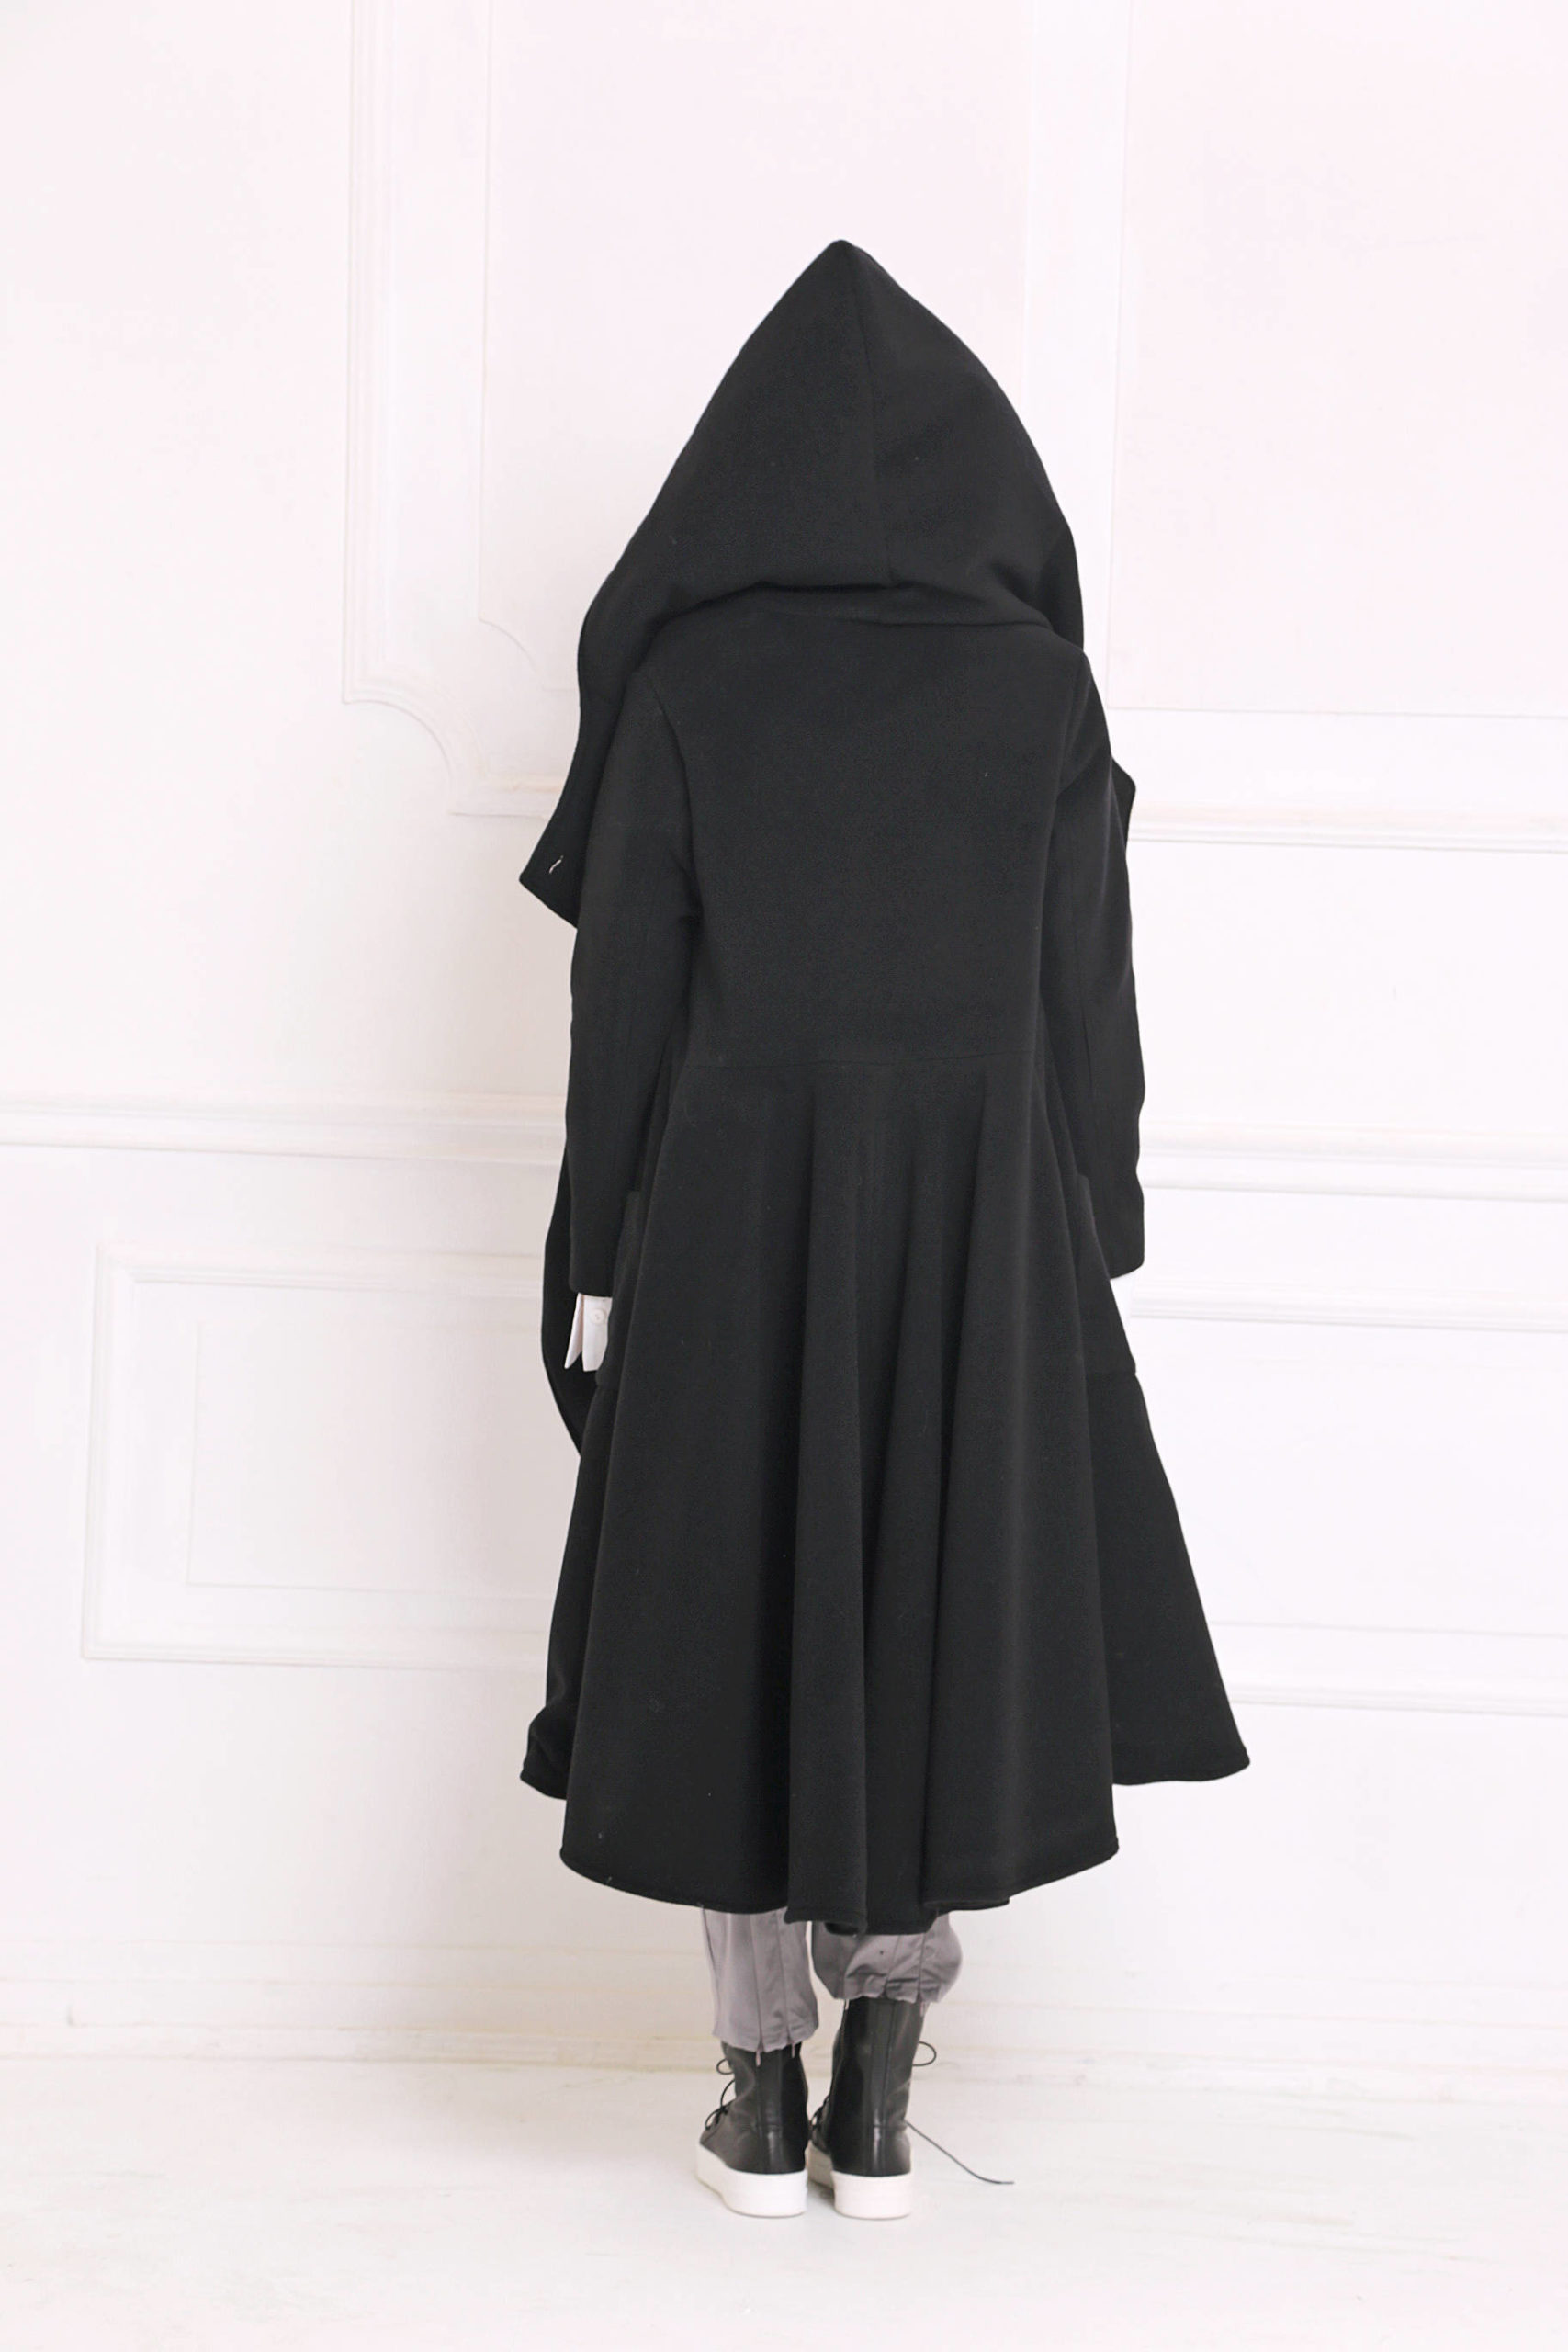 Plus Size Black Coat Online Discounted, Save 70% | jlcatj.gob.mx